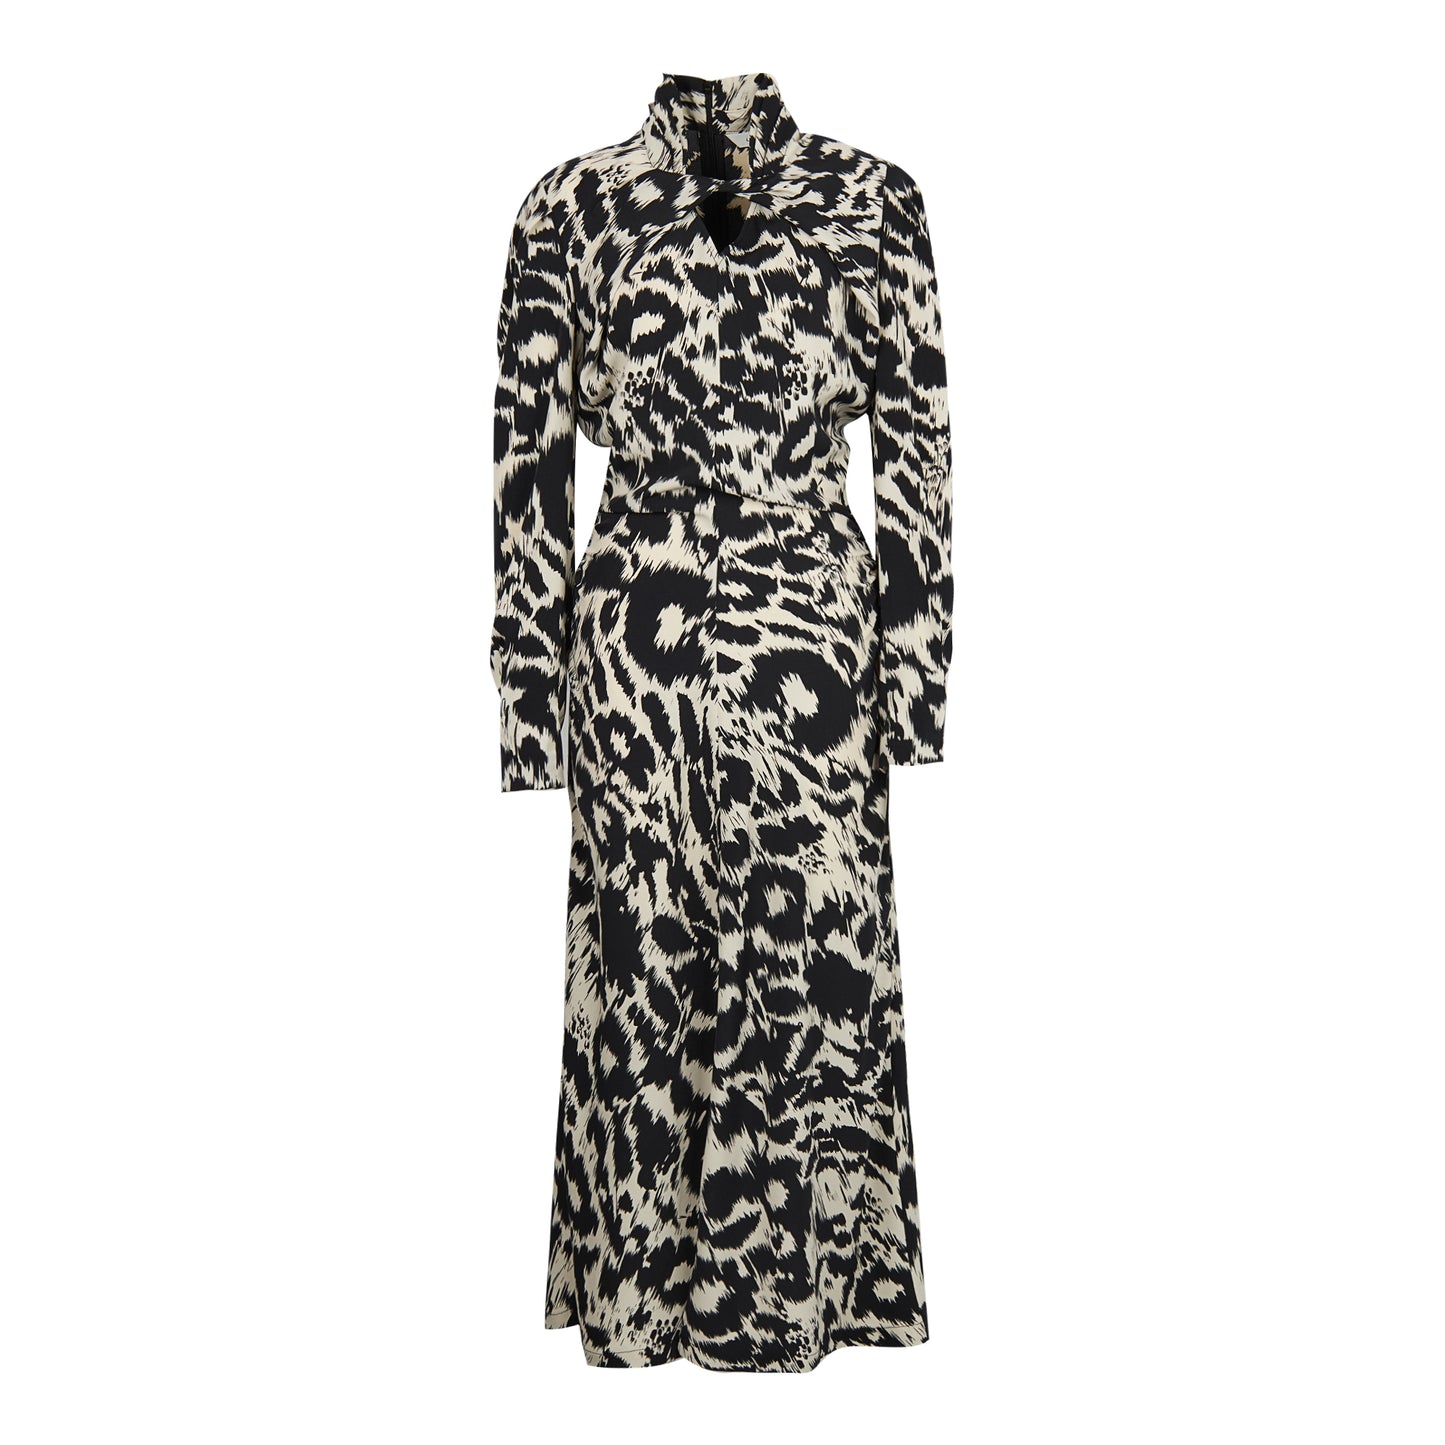 Leopard Print Twisted Dress by LVIR